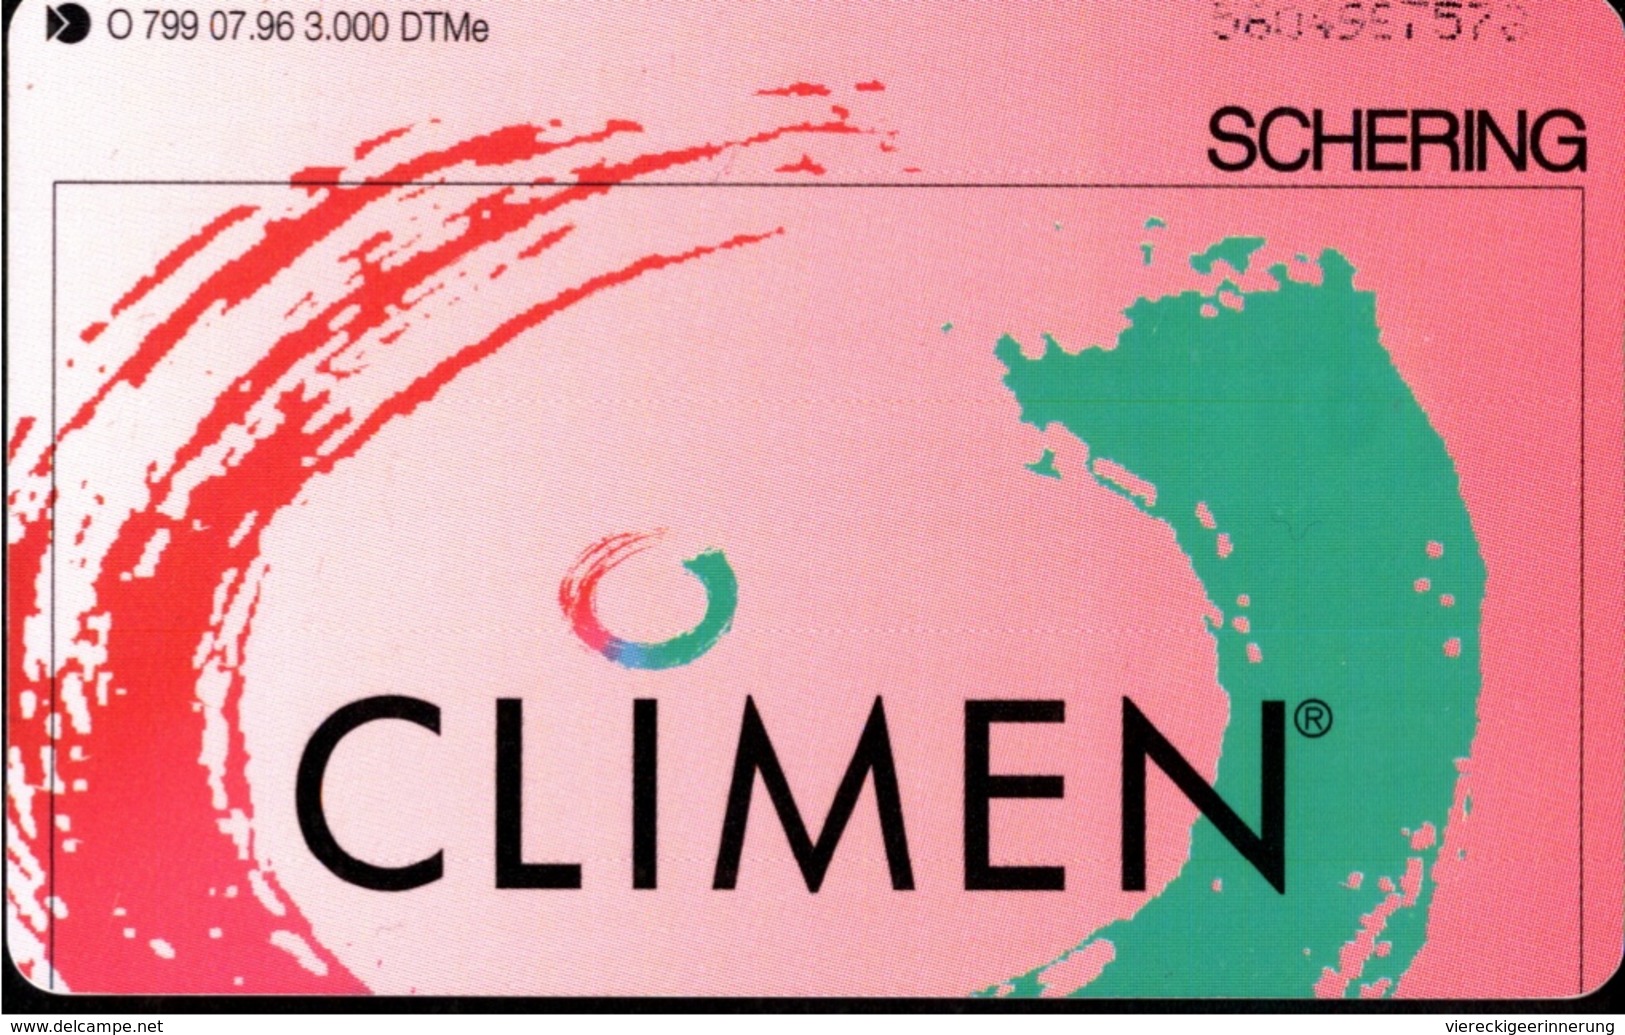 ! Telefonkarte, Telecarte, Phonecard, 1996, O799, Auflage 3000, Schering, Climen, Germany - O-Reeksen : Klantenreeksen